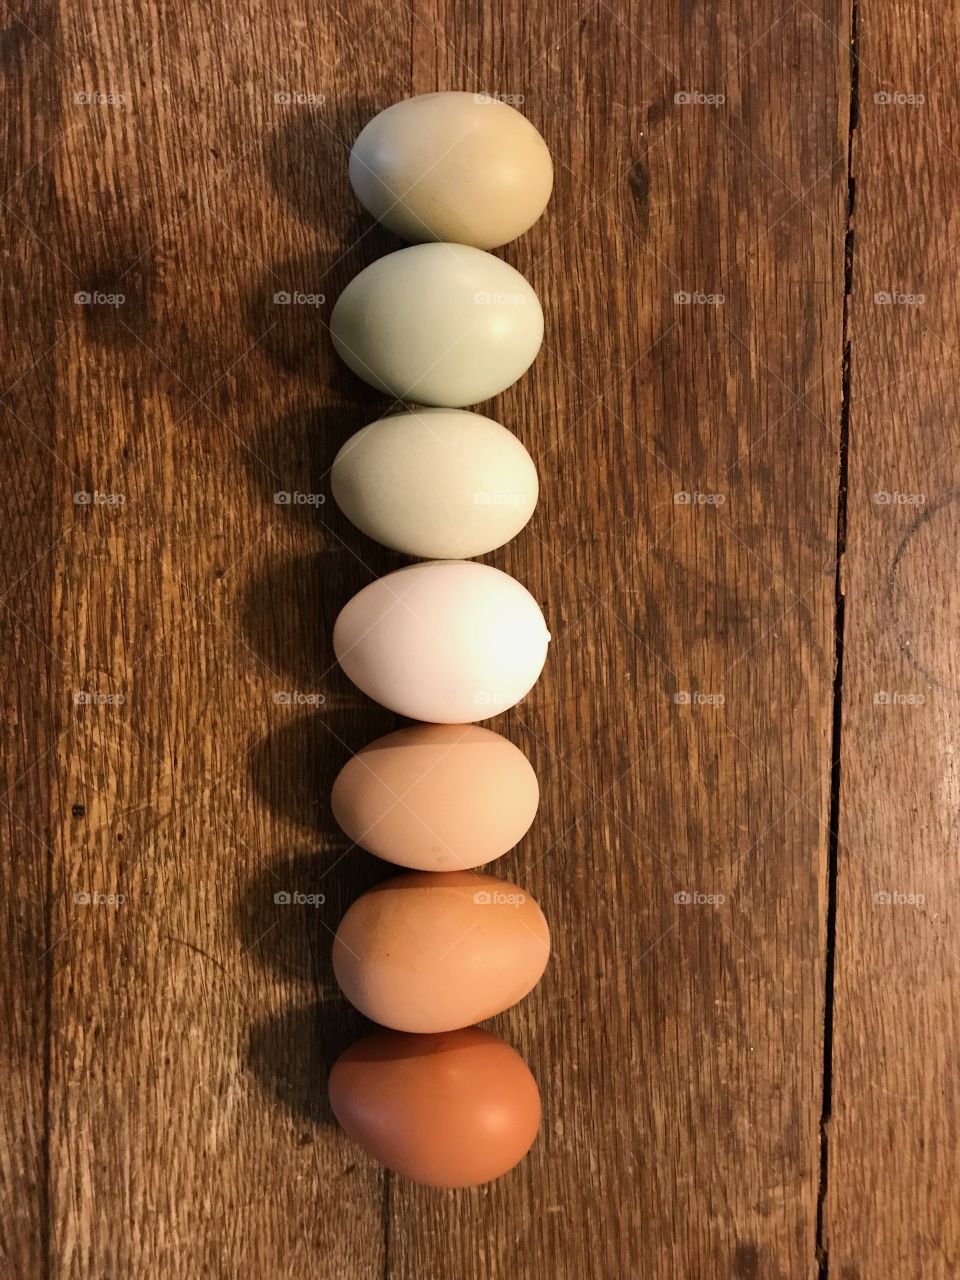 Eggs wonderful eggs